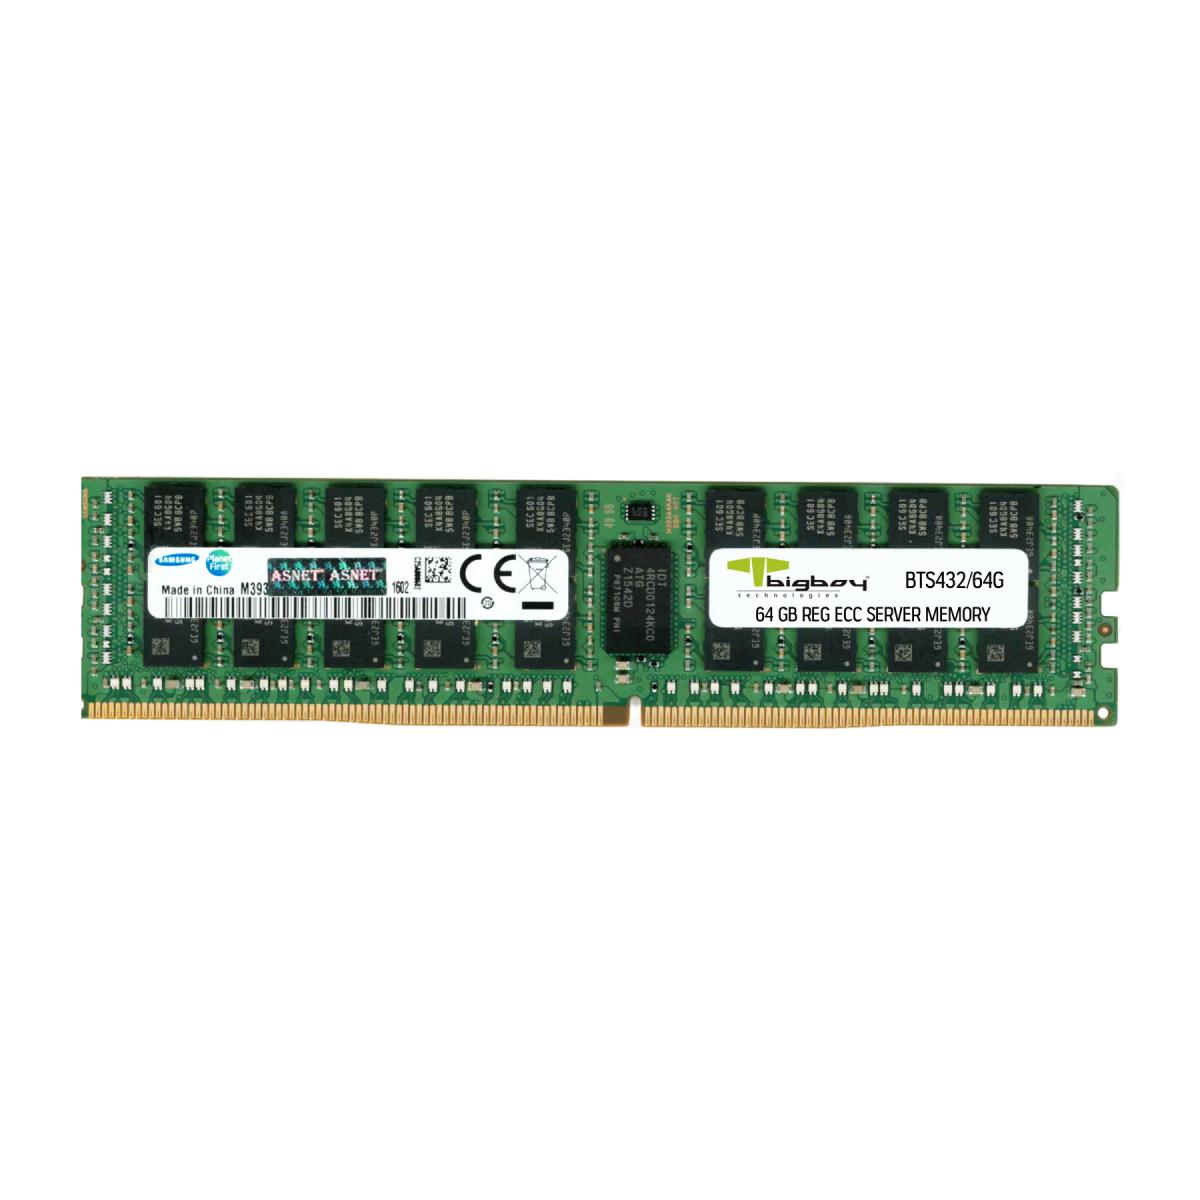 Bigboy 64GB DDR4 3200MHz CL22 Registered ECC Server Rami BTS432/64G